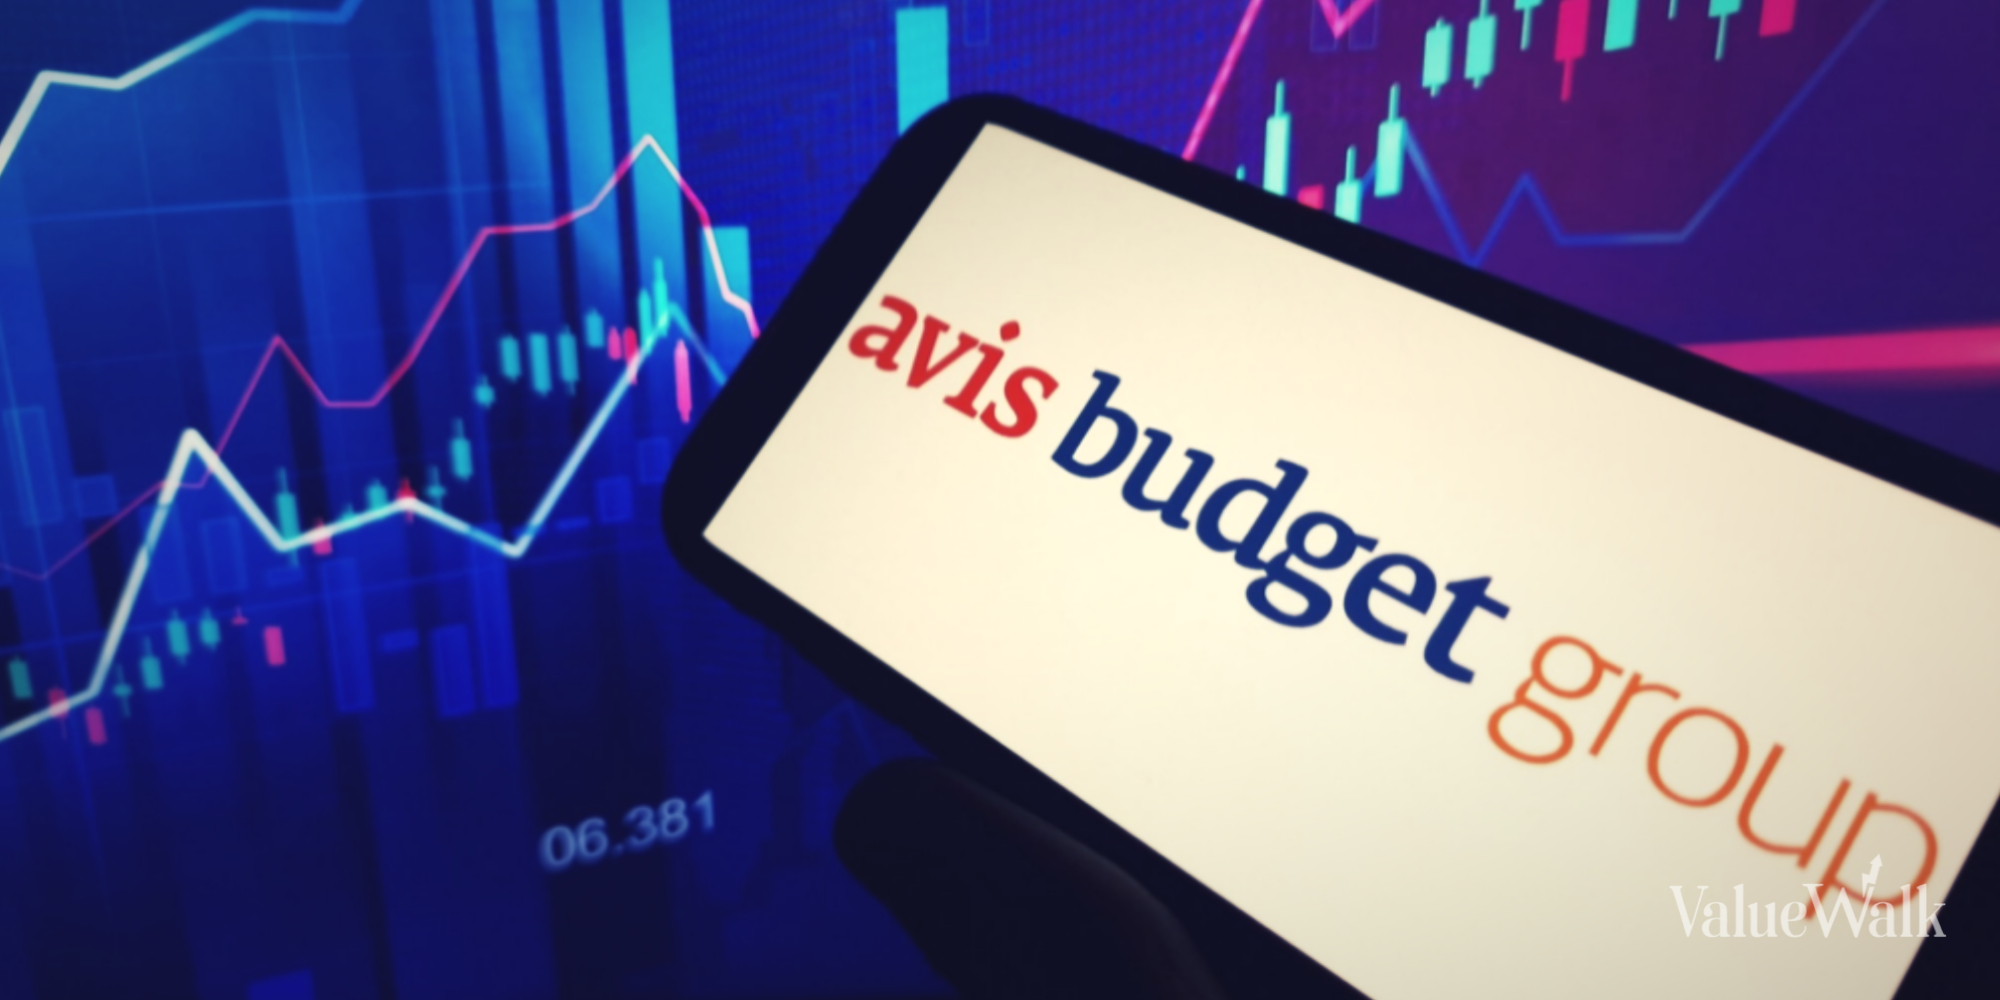 Avis Budget Group Stock